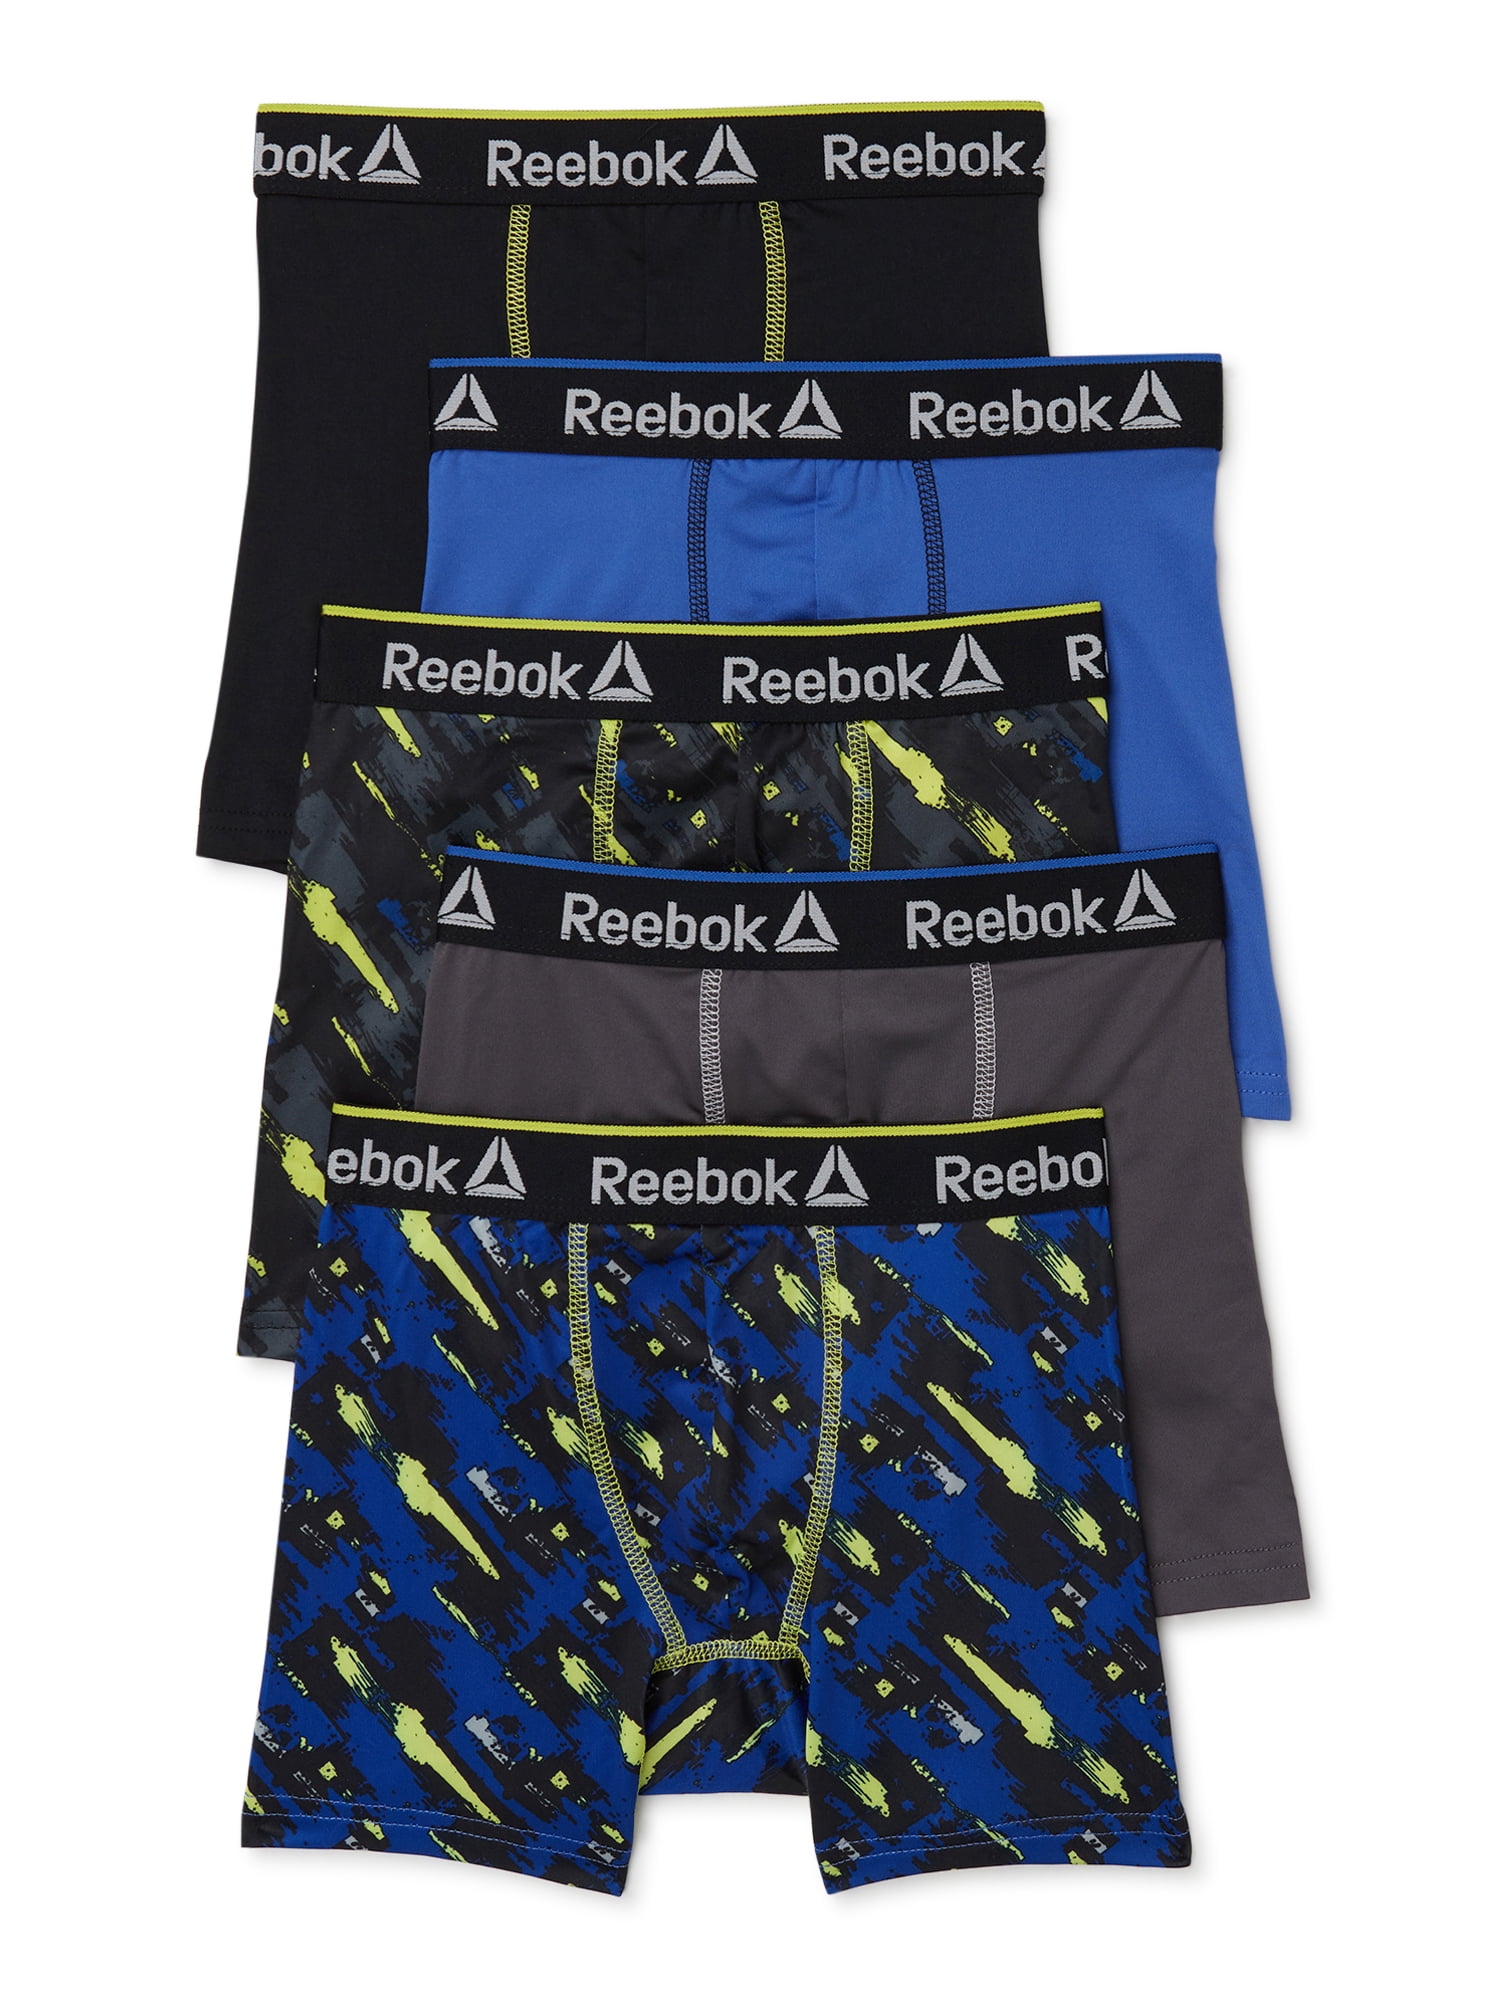 Reebok Men?s Underwear - Quick Dry Performance Low Rise Briefs (5